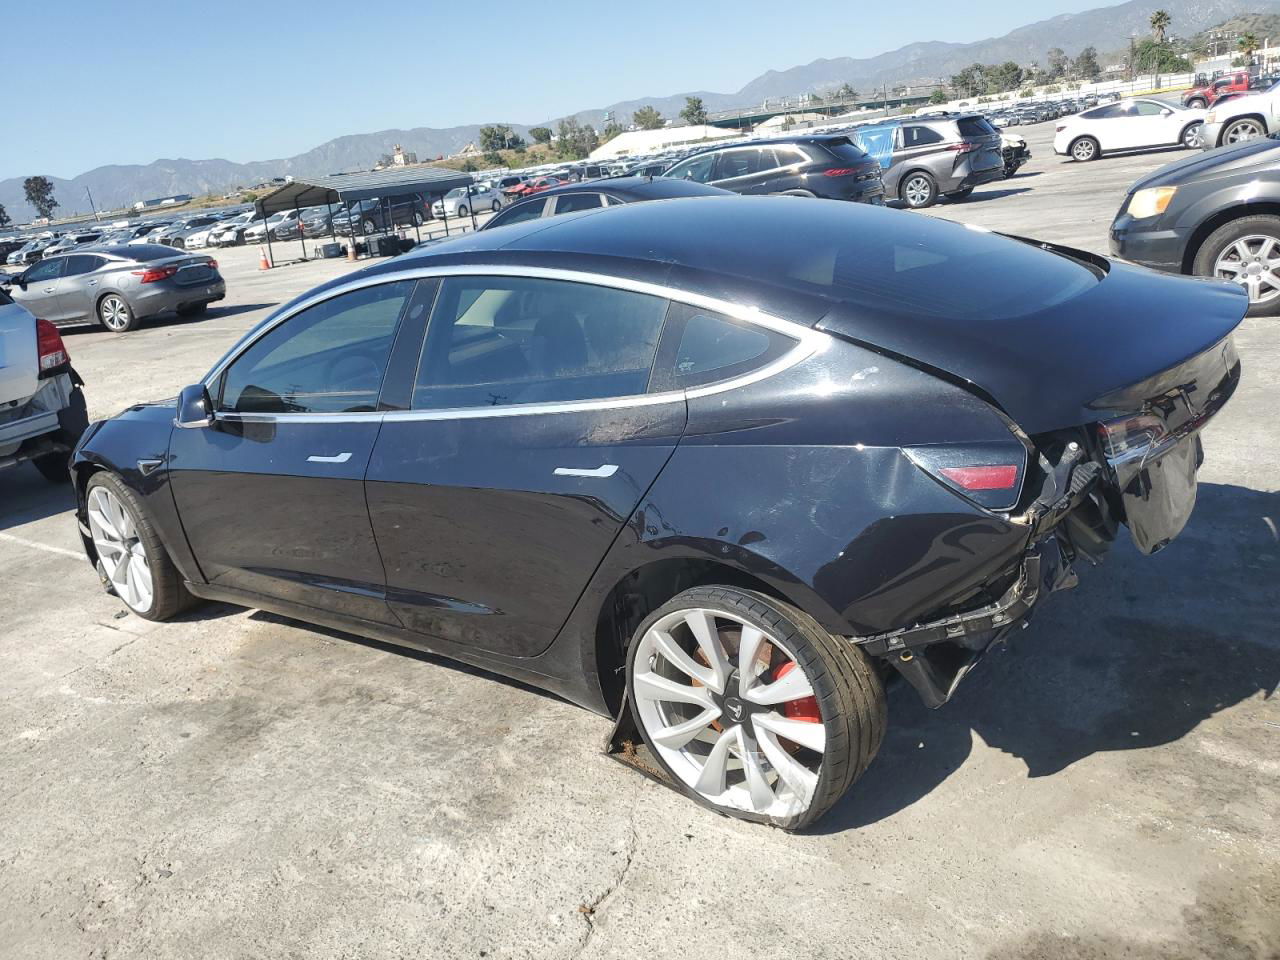 2018 Tesla Model 3 Черный vin: 5YJ3E1EB2JF082637